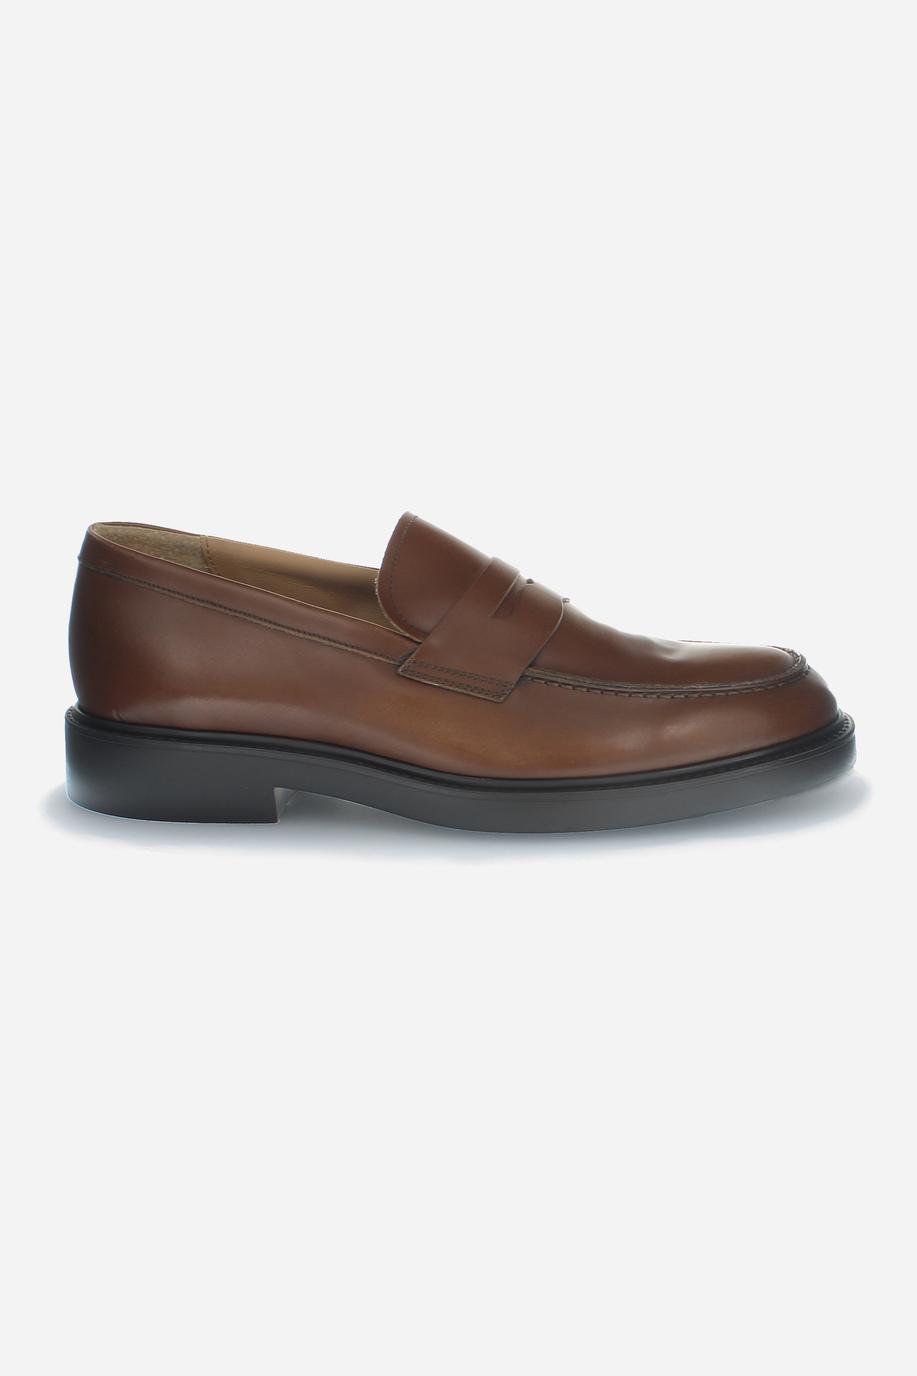 Leather moccasins - Formal Shoes | La Martina - Official Online Shop